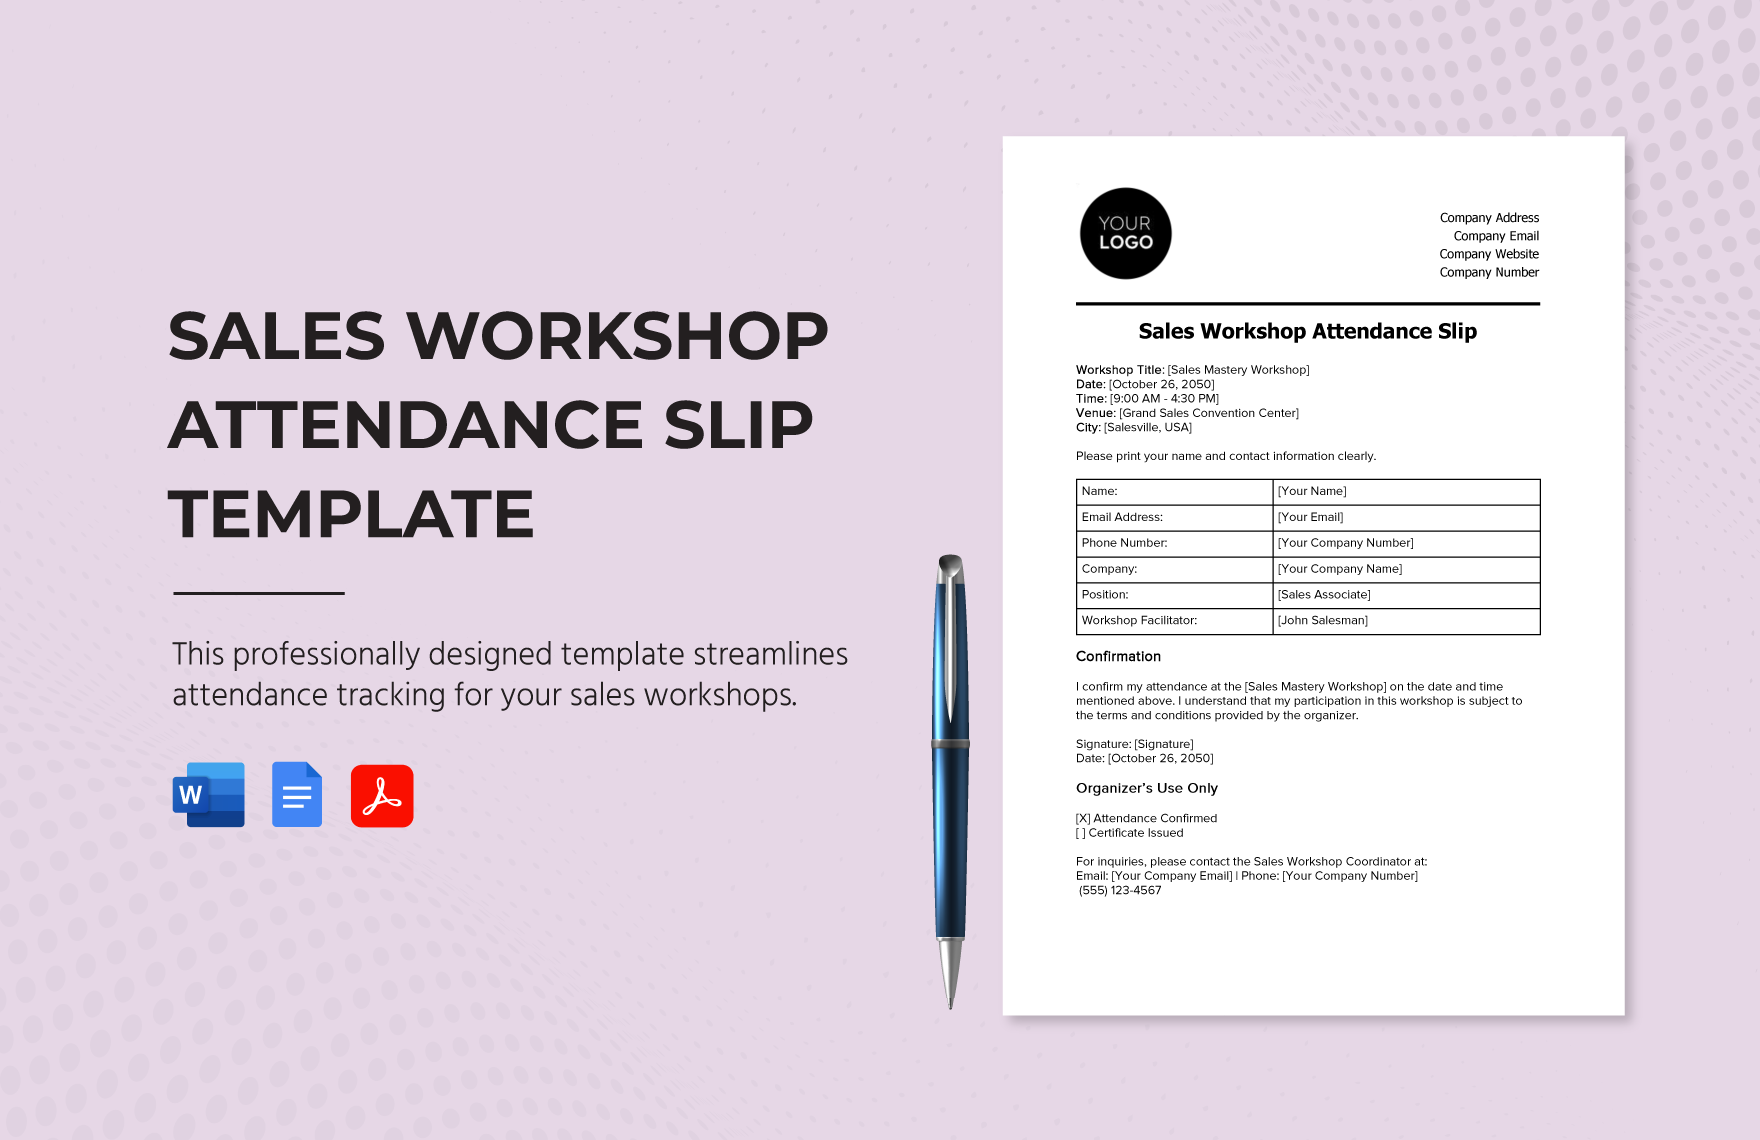 Sales Workshop Attendance Slip Template in Word, Google Docs, PDF